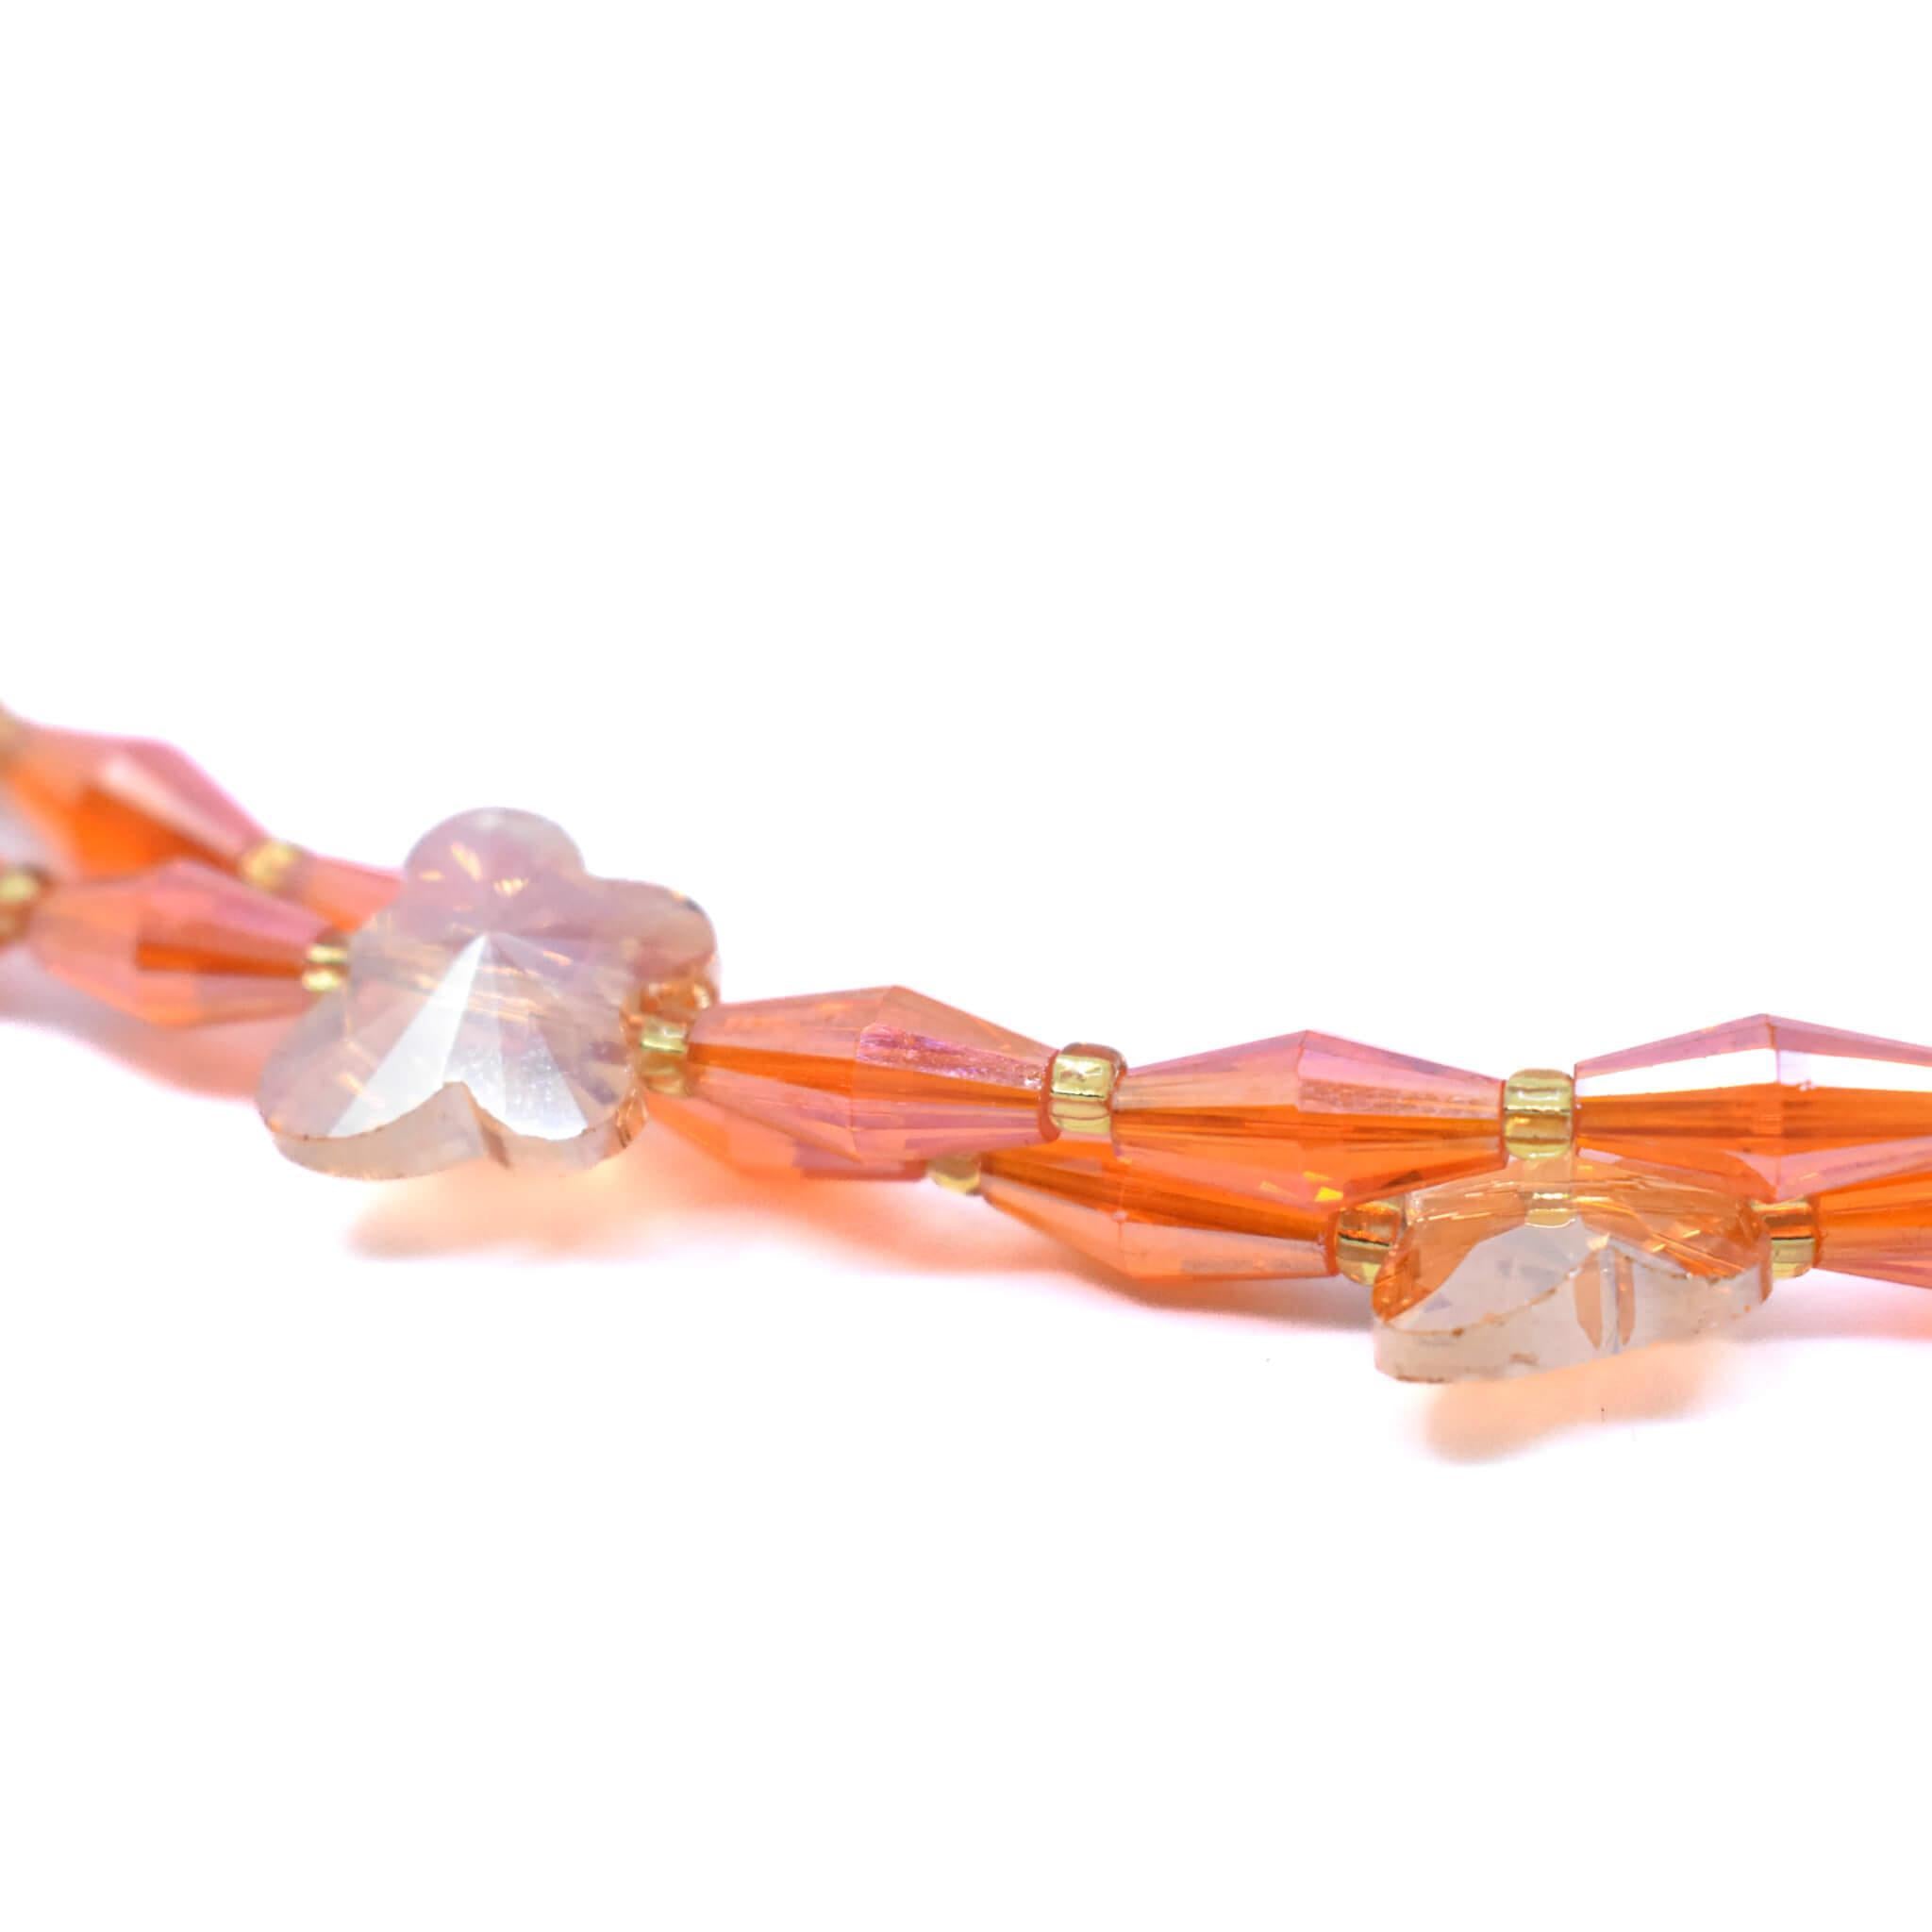 Orange Glass Waist Beads